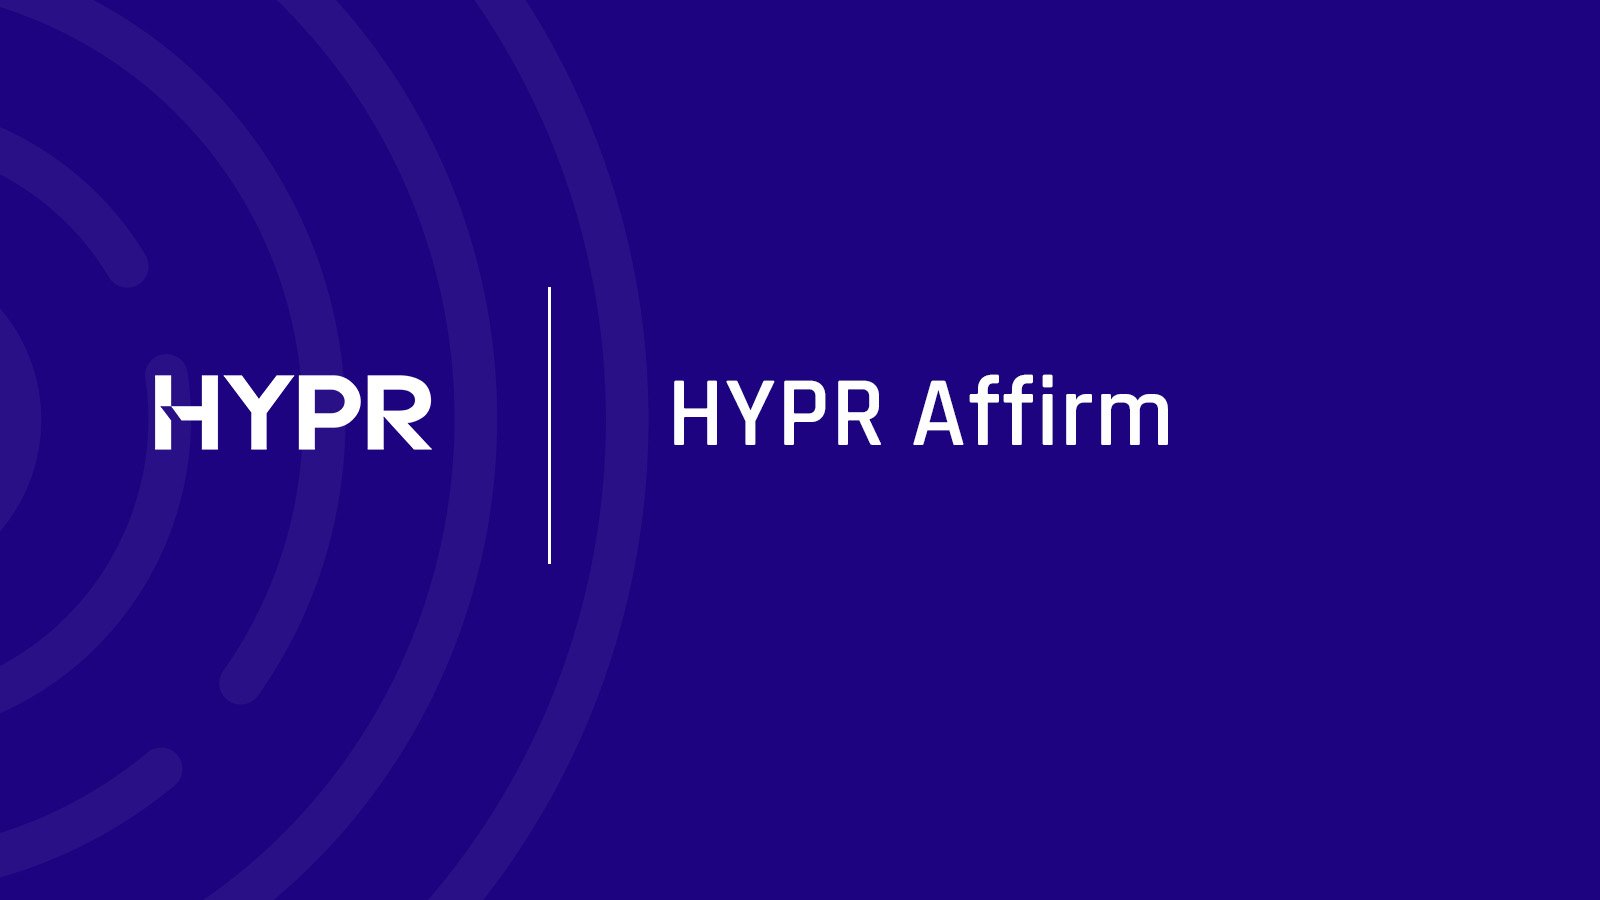 HYPR Affirm Demo